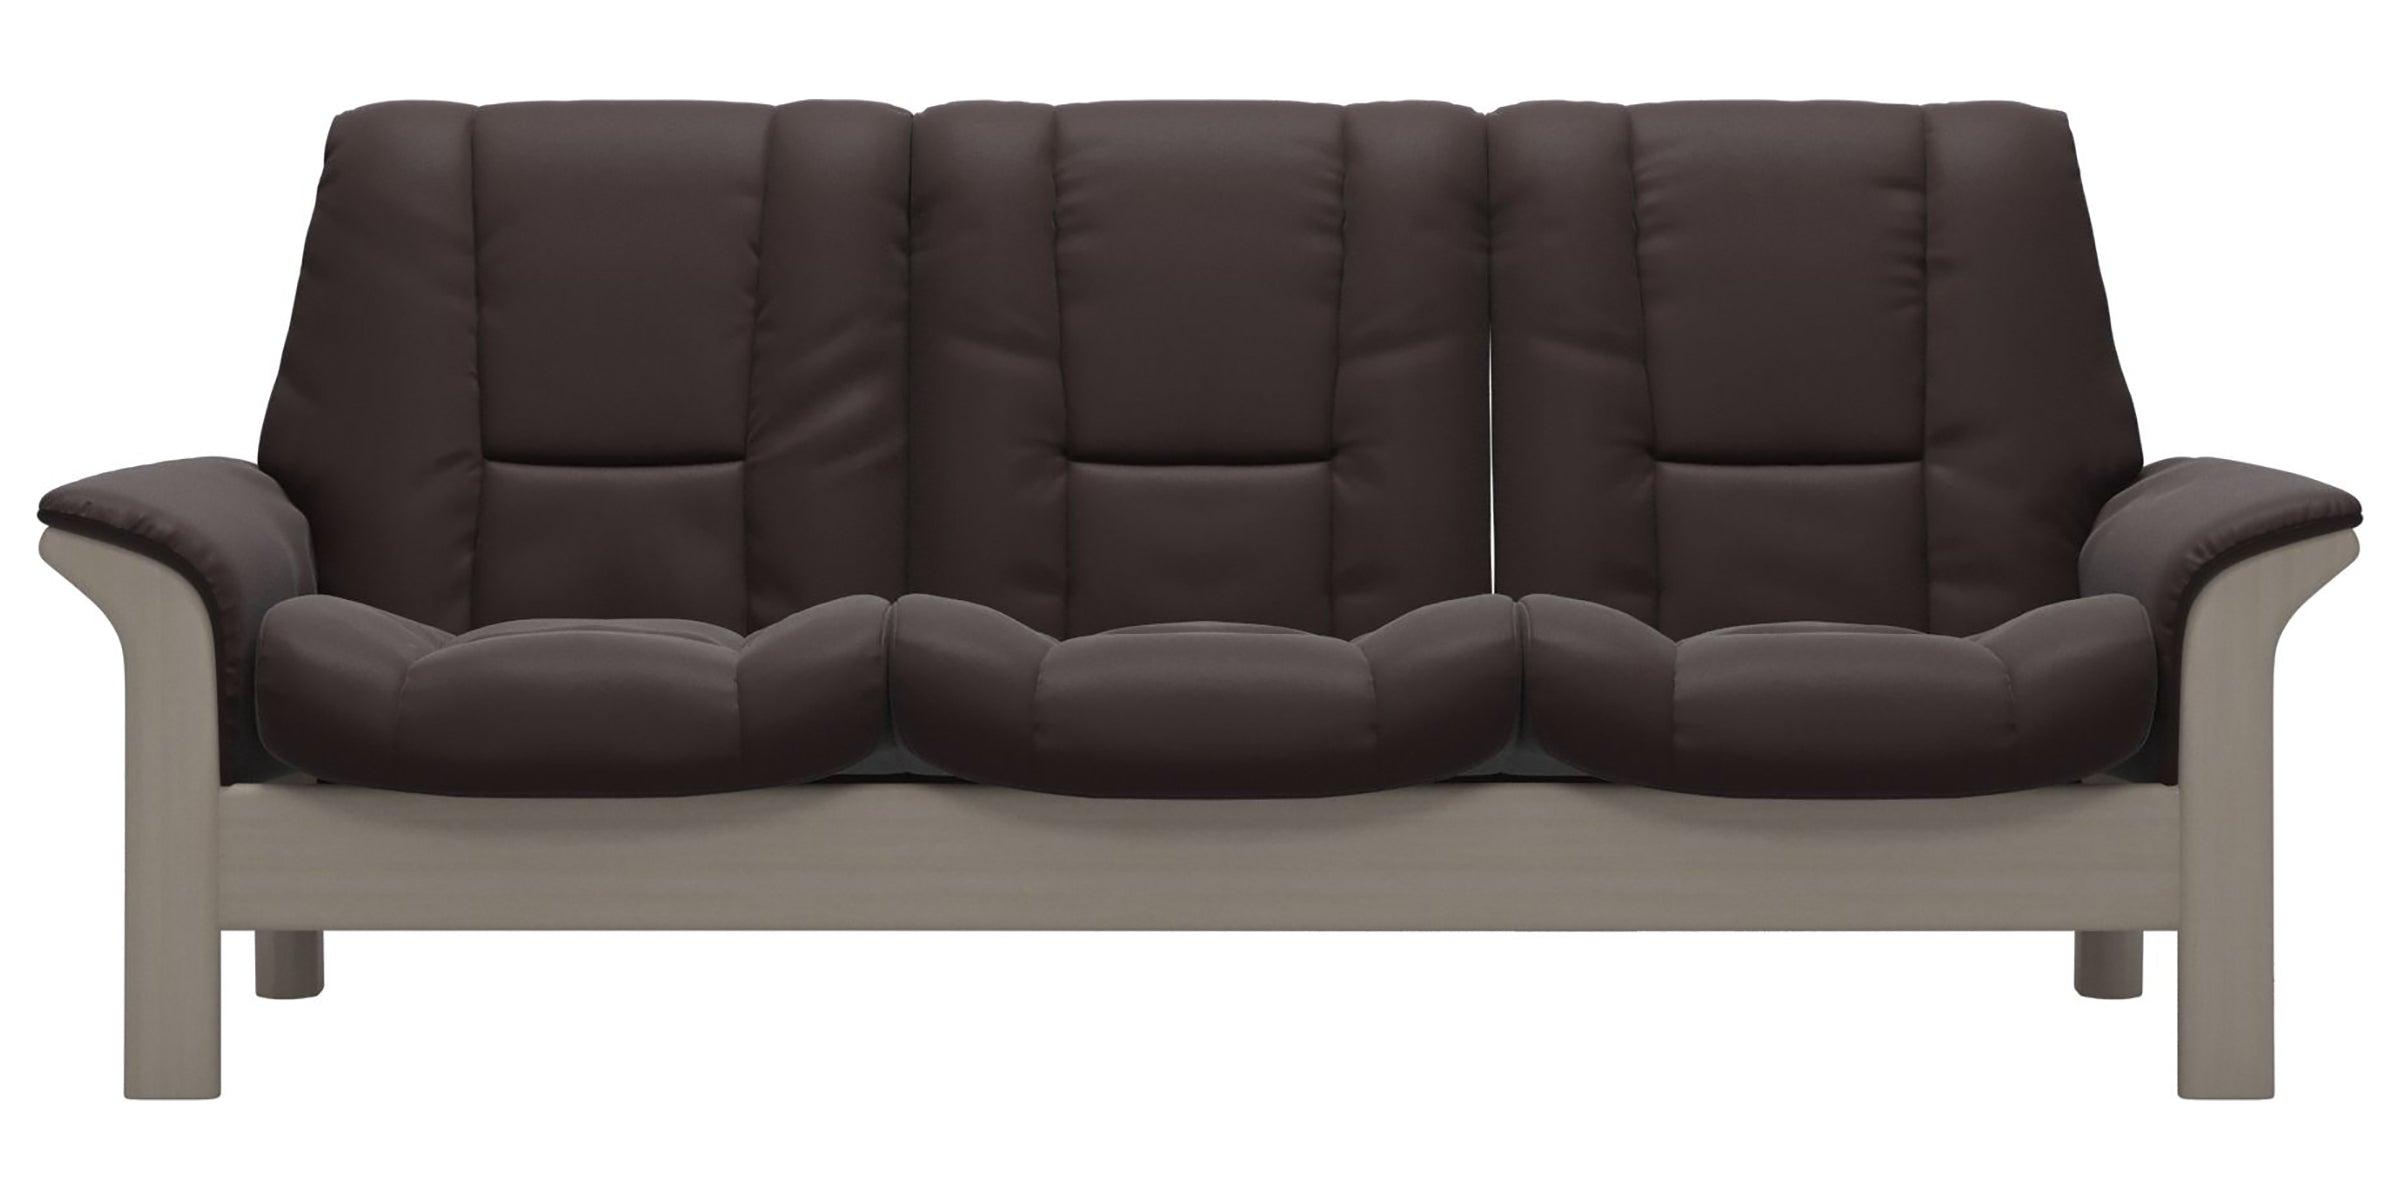 Paloma Leather Chocolate and Whitewash Base | Stressless Windsor 3-Seater Low Back Sofa | Valley Ridge Furniture